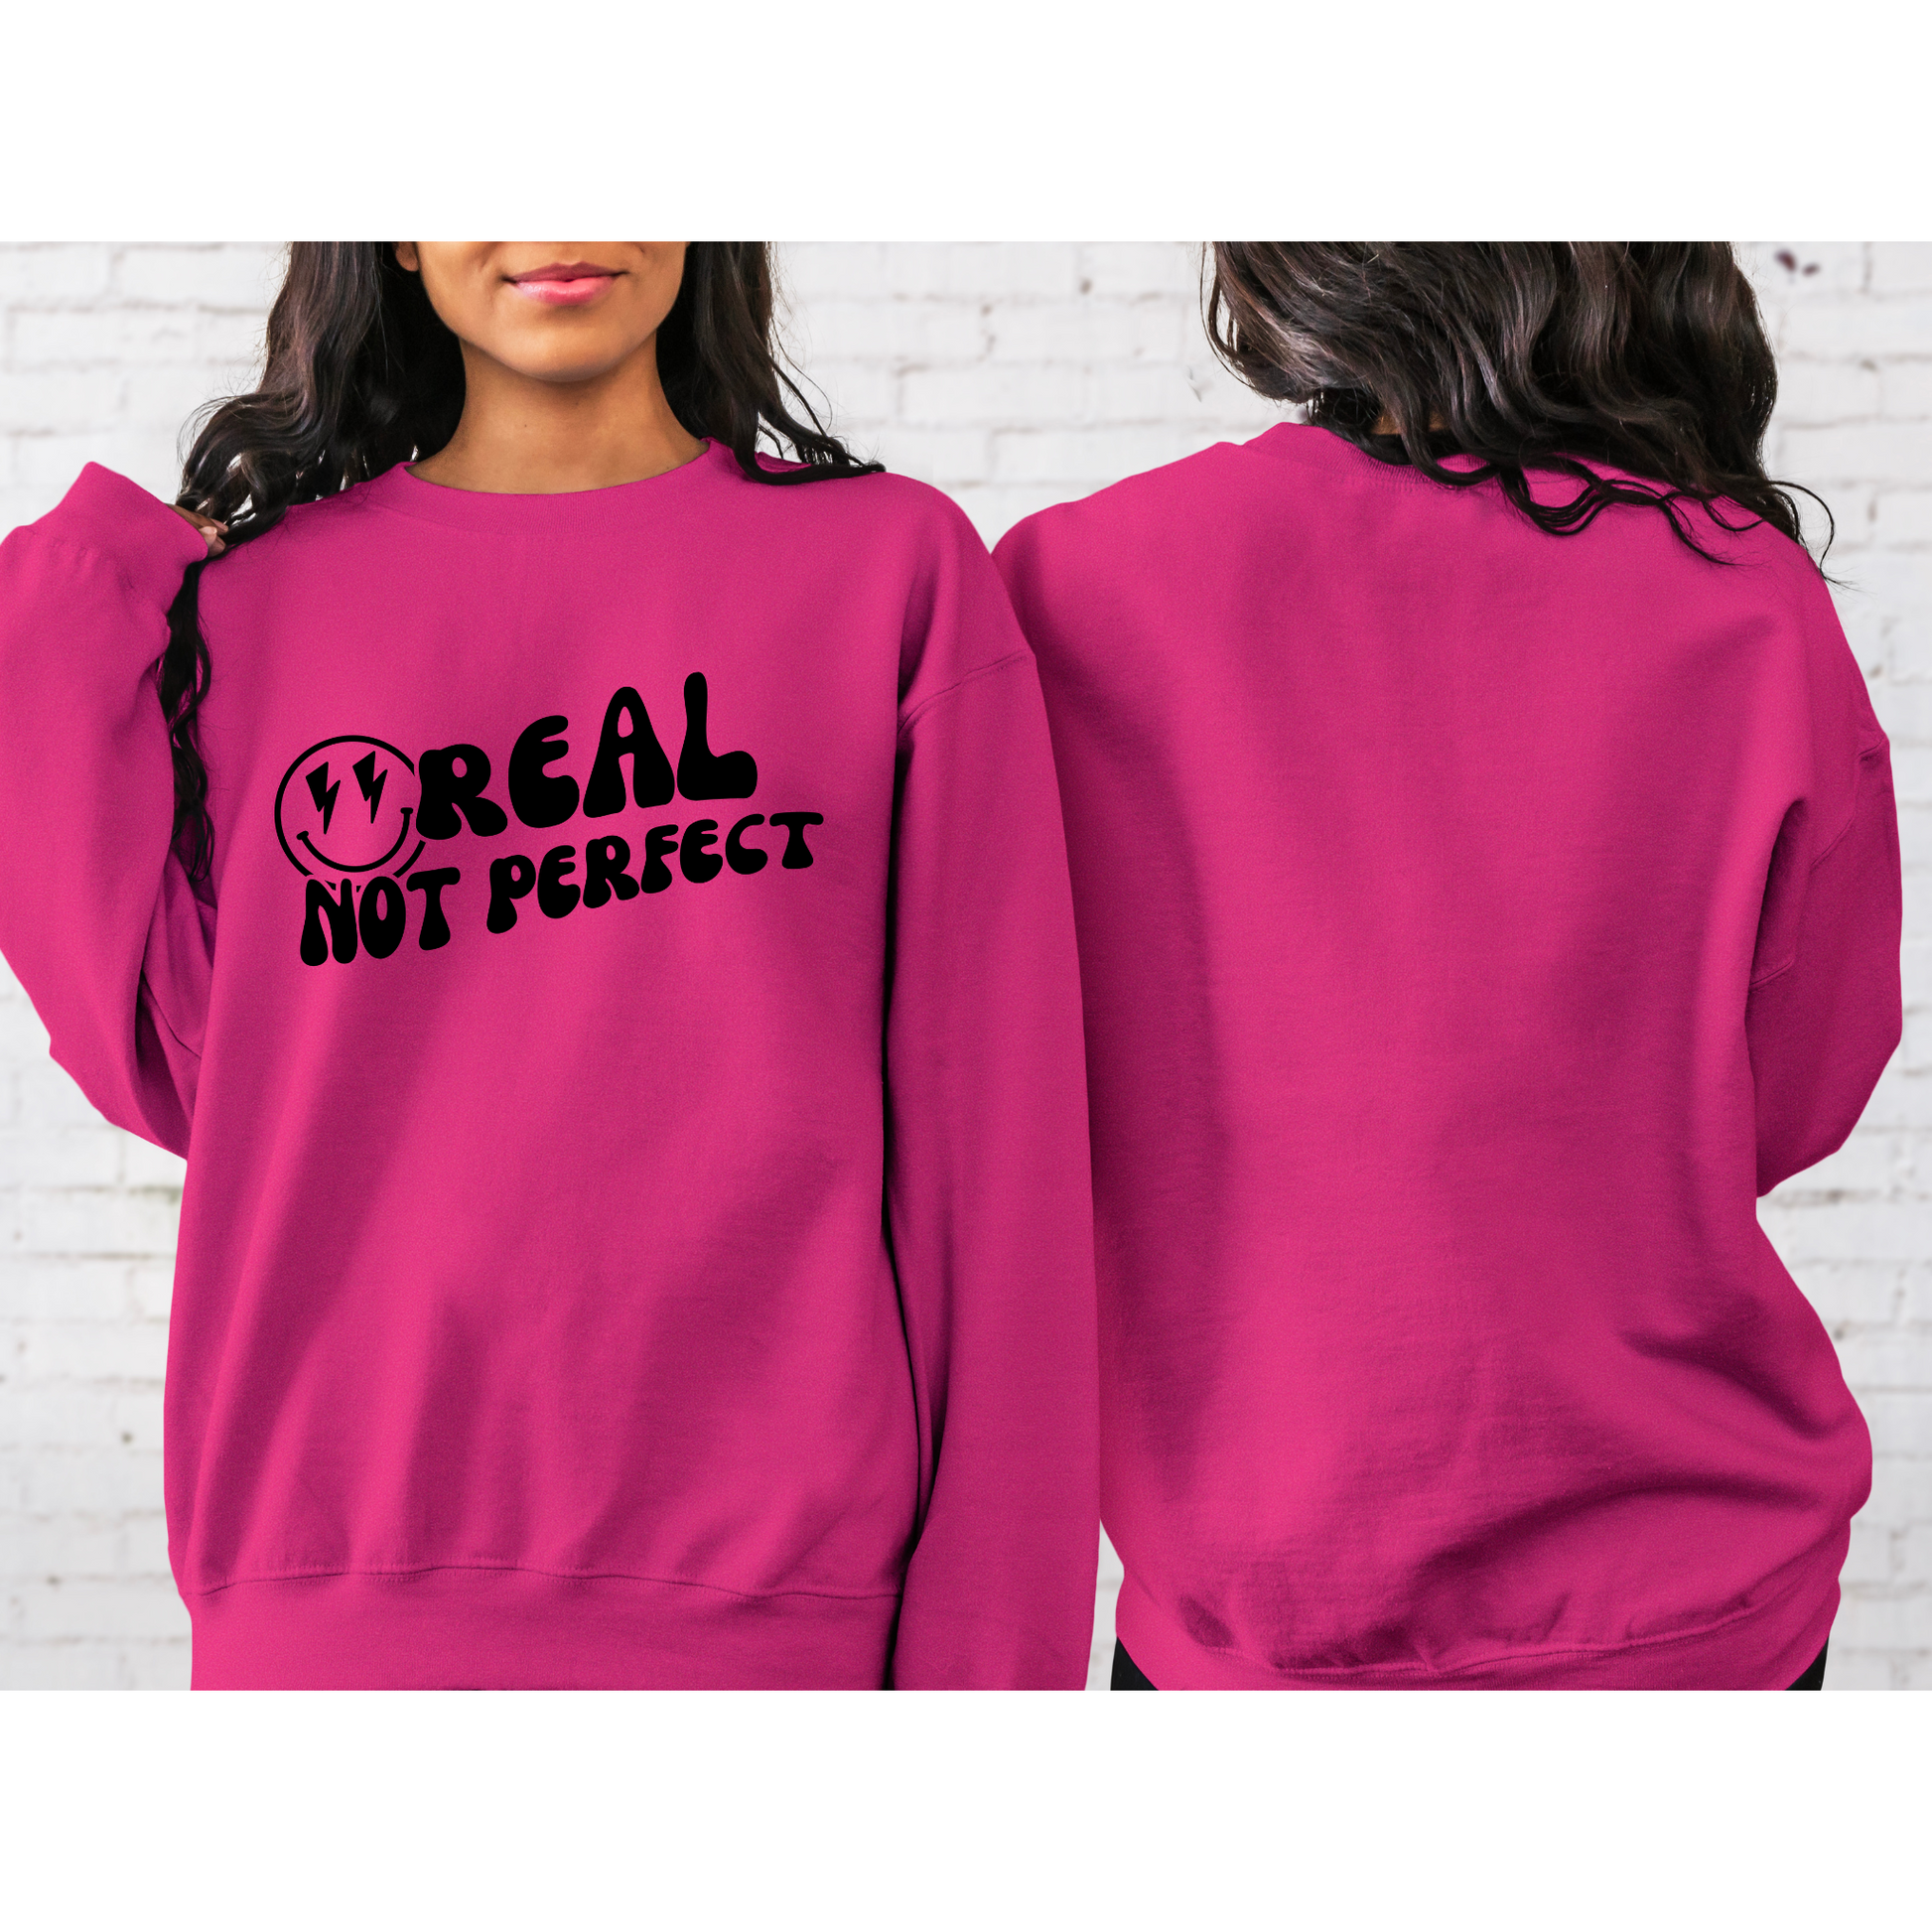 Real, Not Perfect Crewneck Sweatshirt dark pink